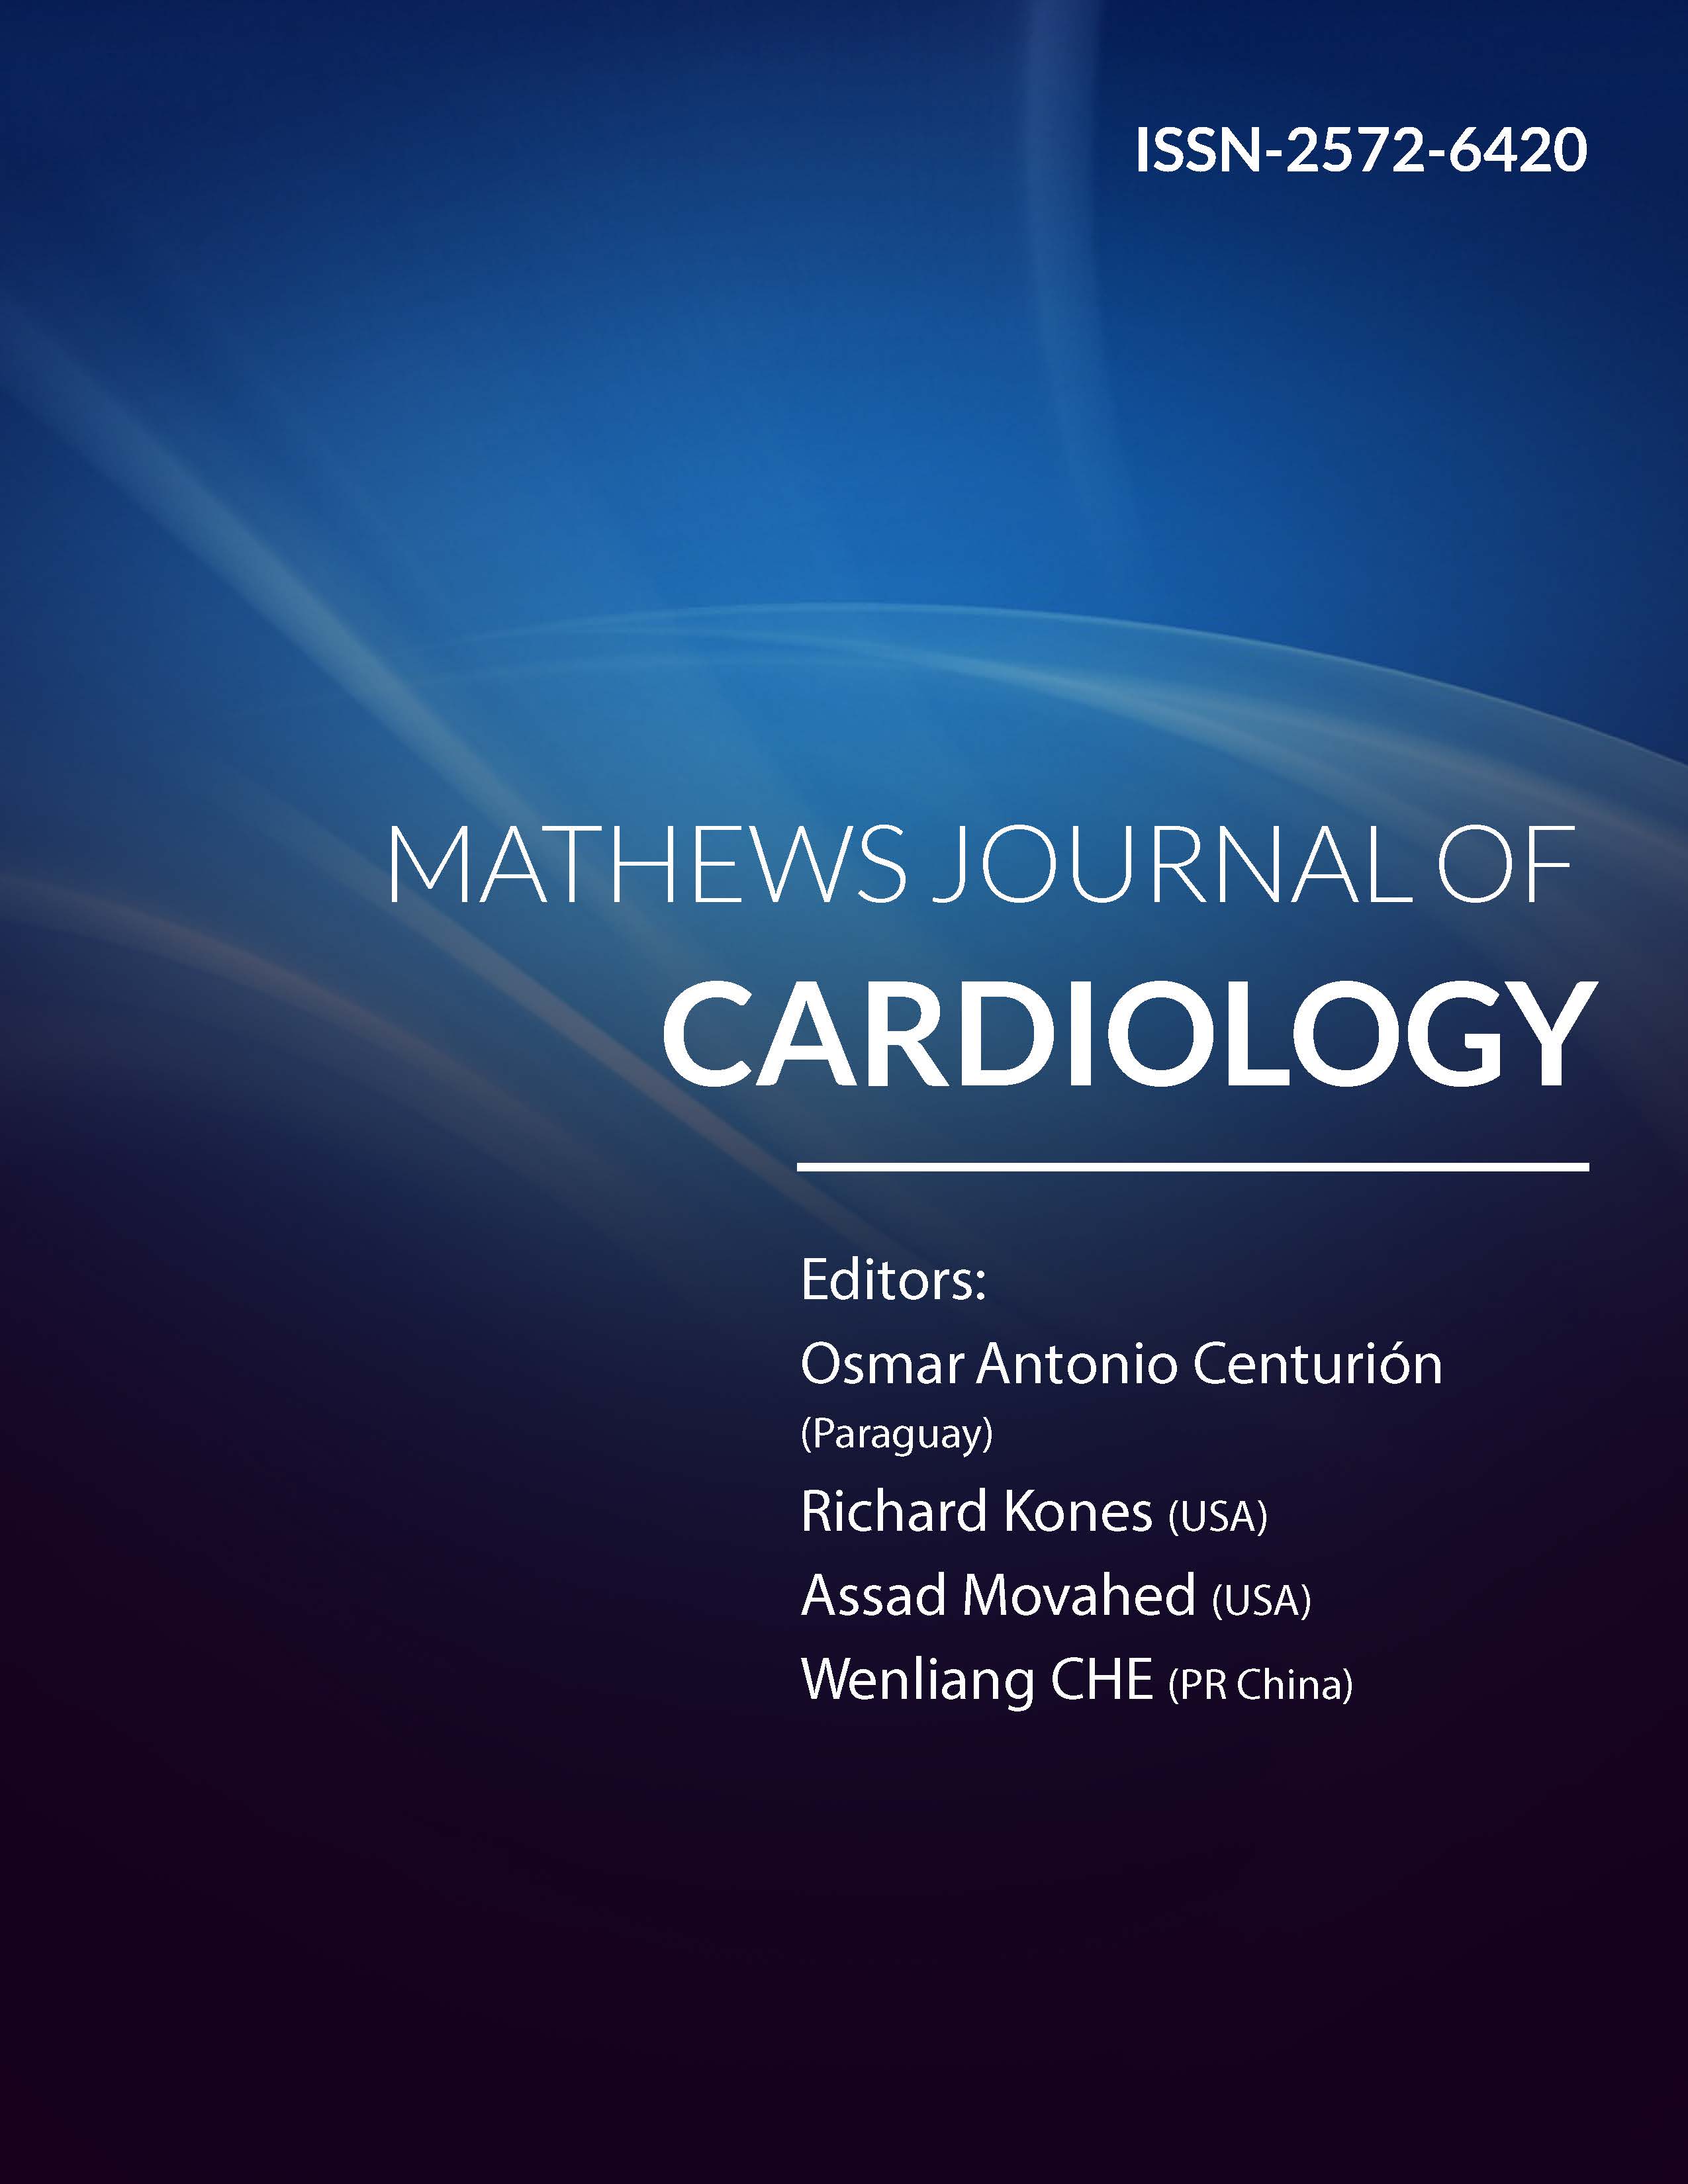 Mathews Journal of Cardiology